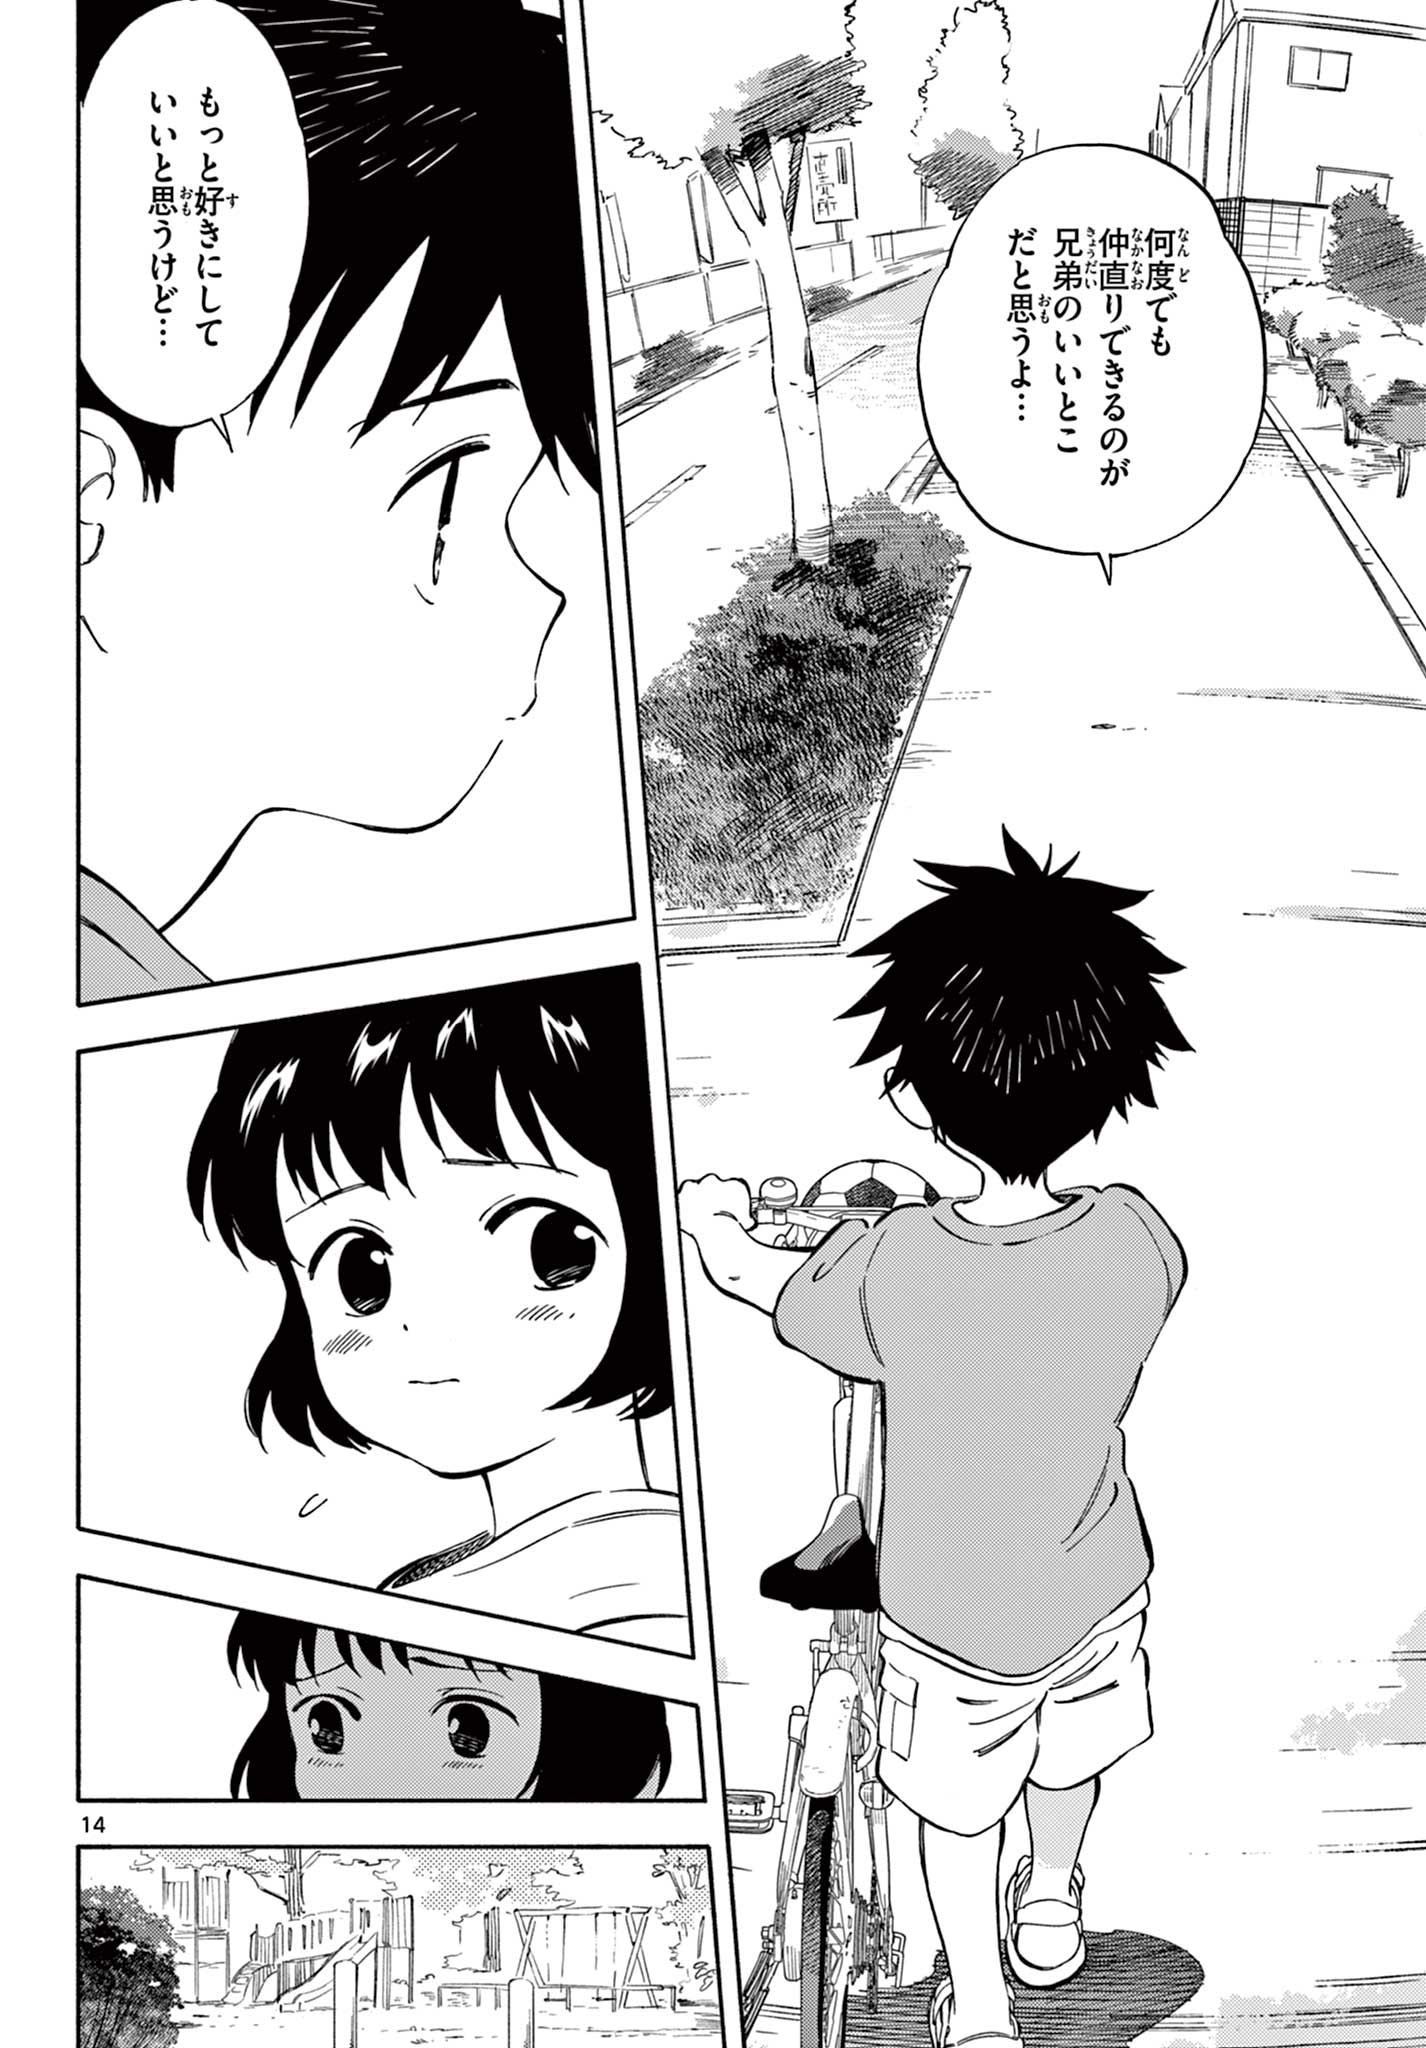 Nami no Shijima no Horizont - Chapter 11.1 - Page 14